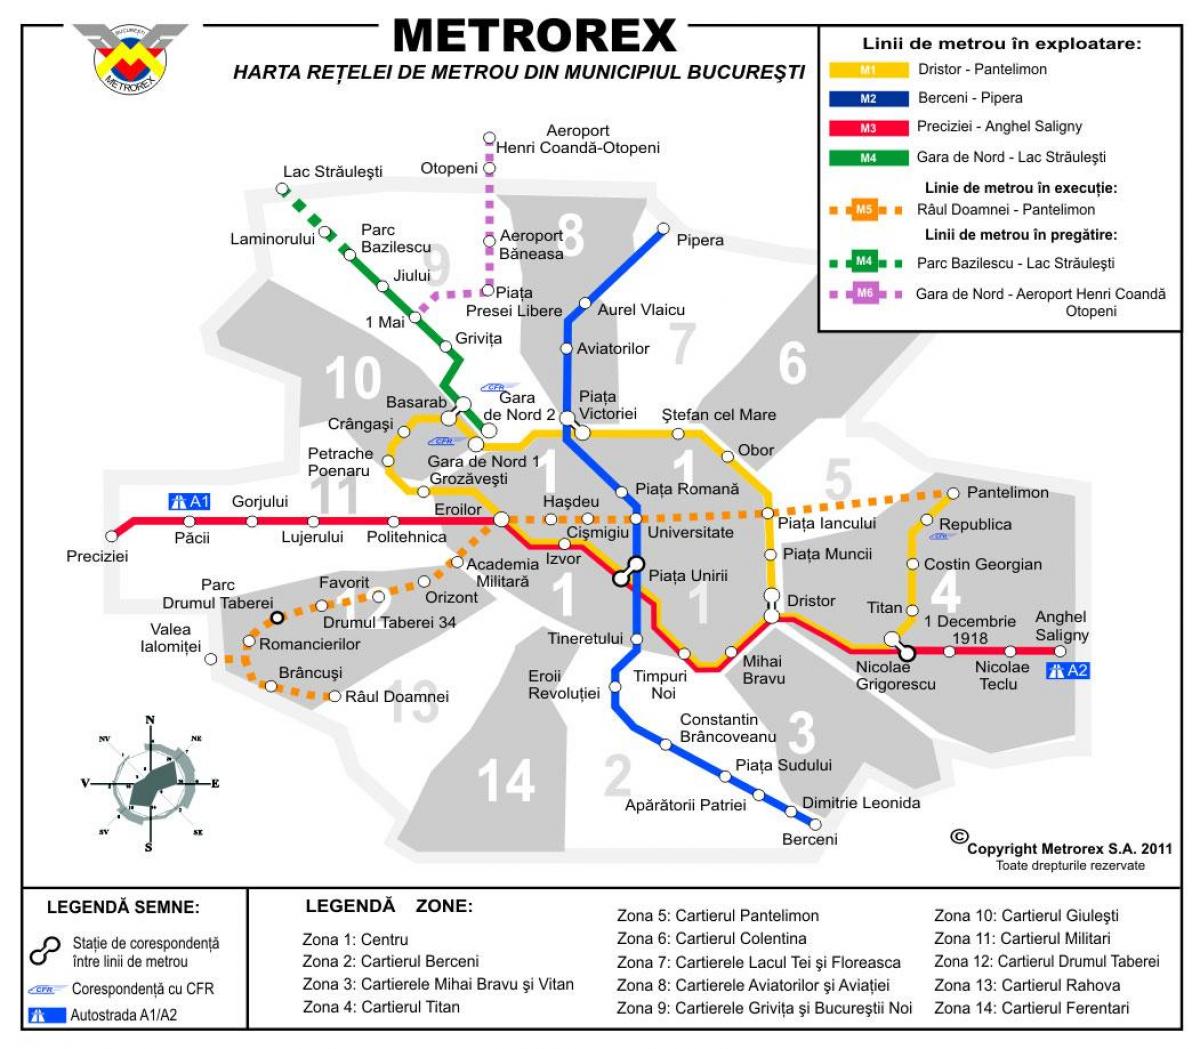 Kart metrorex 